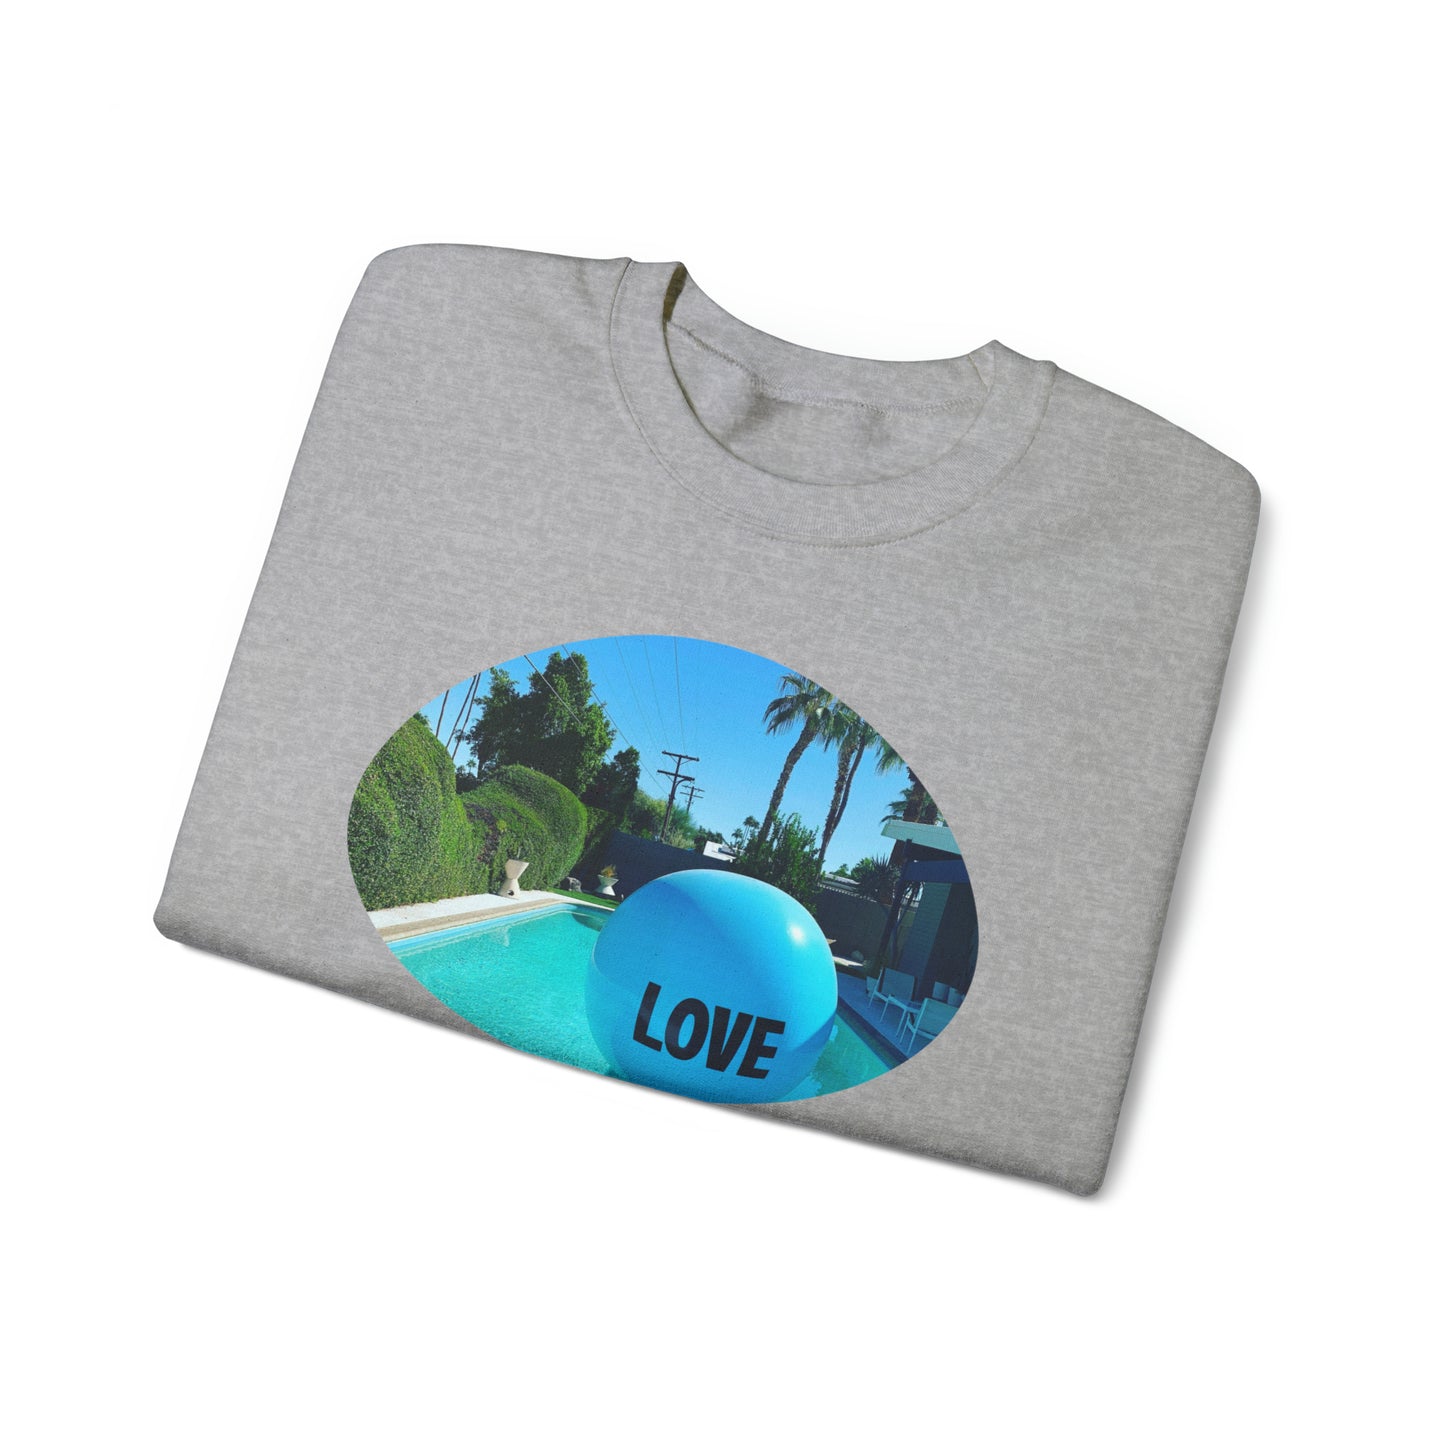 Staycation in Palm Springs  Unisex Lifestyle Sweatshirt by ViralDestinations